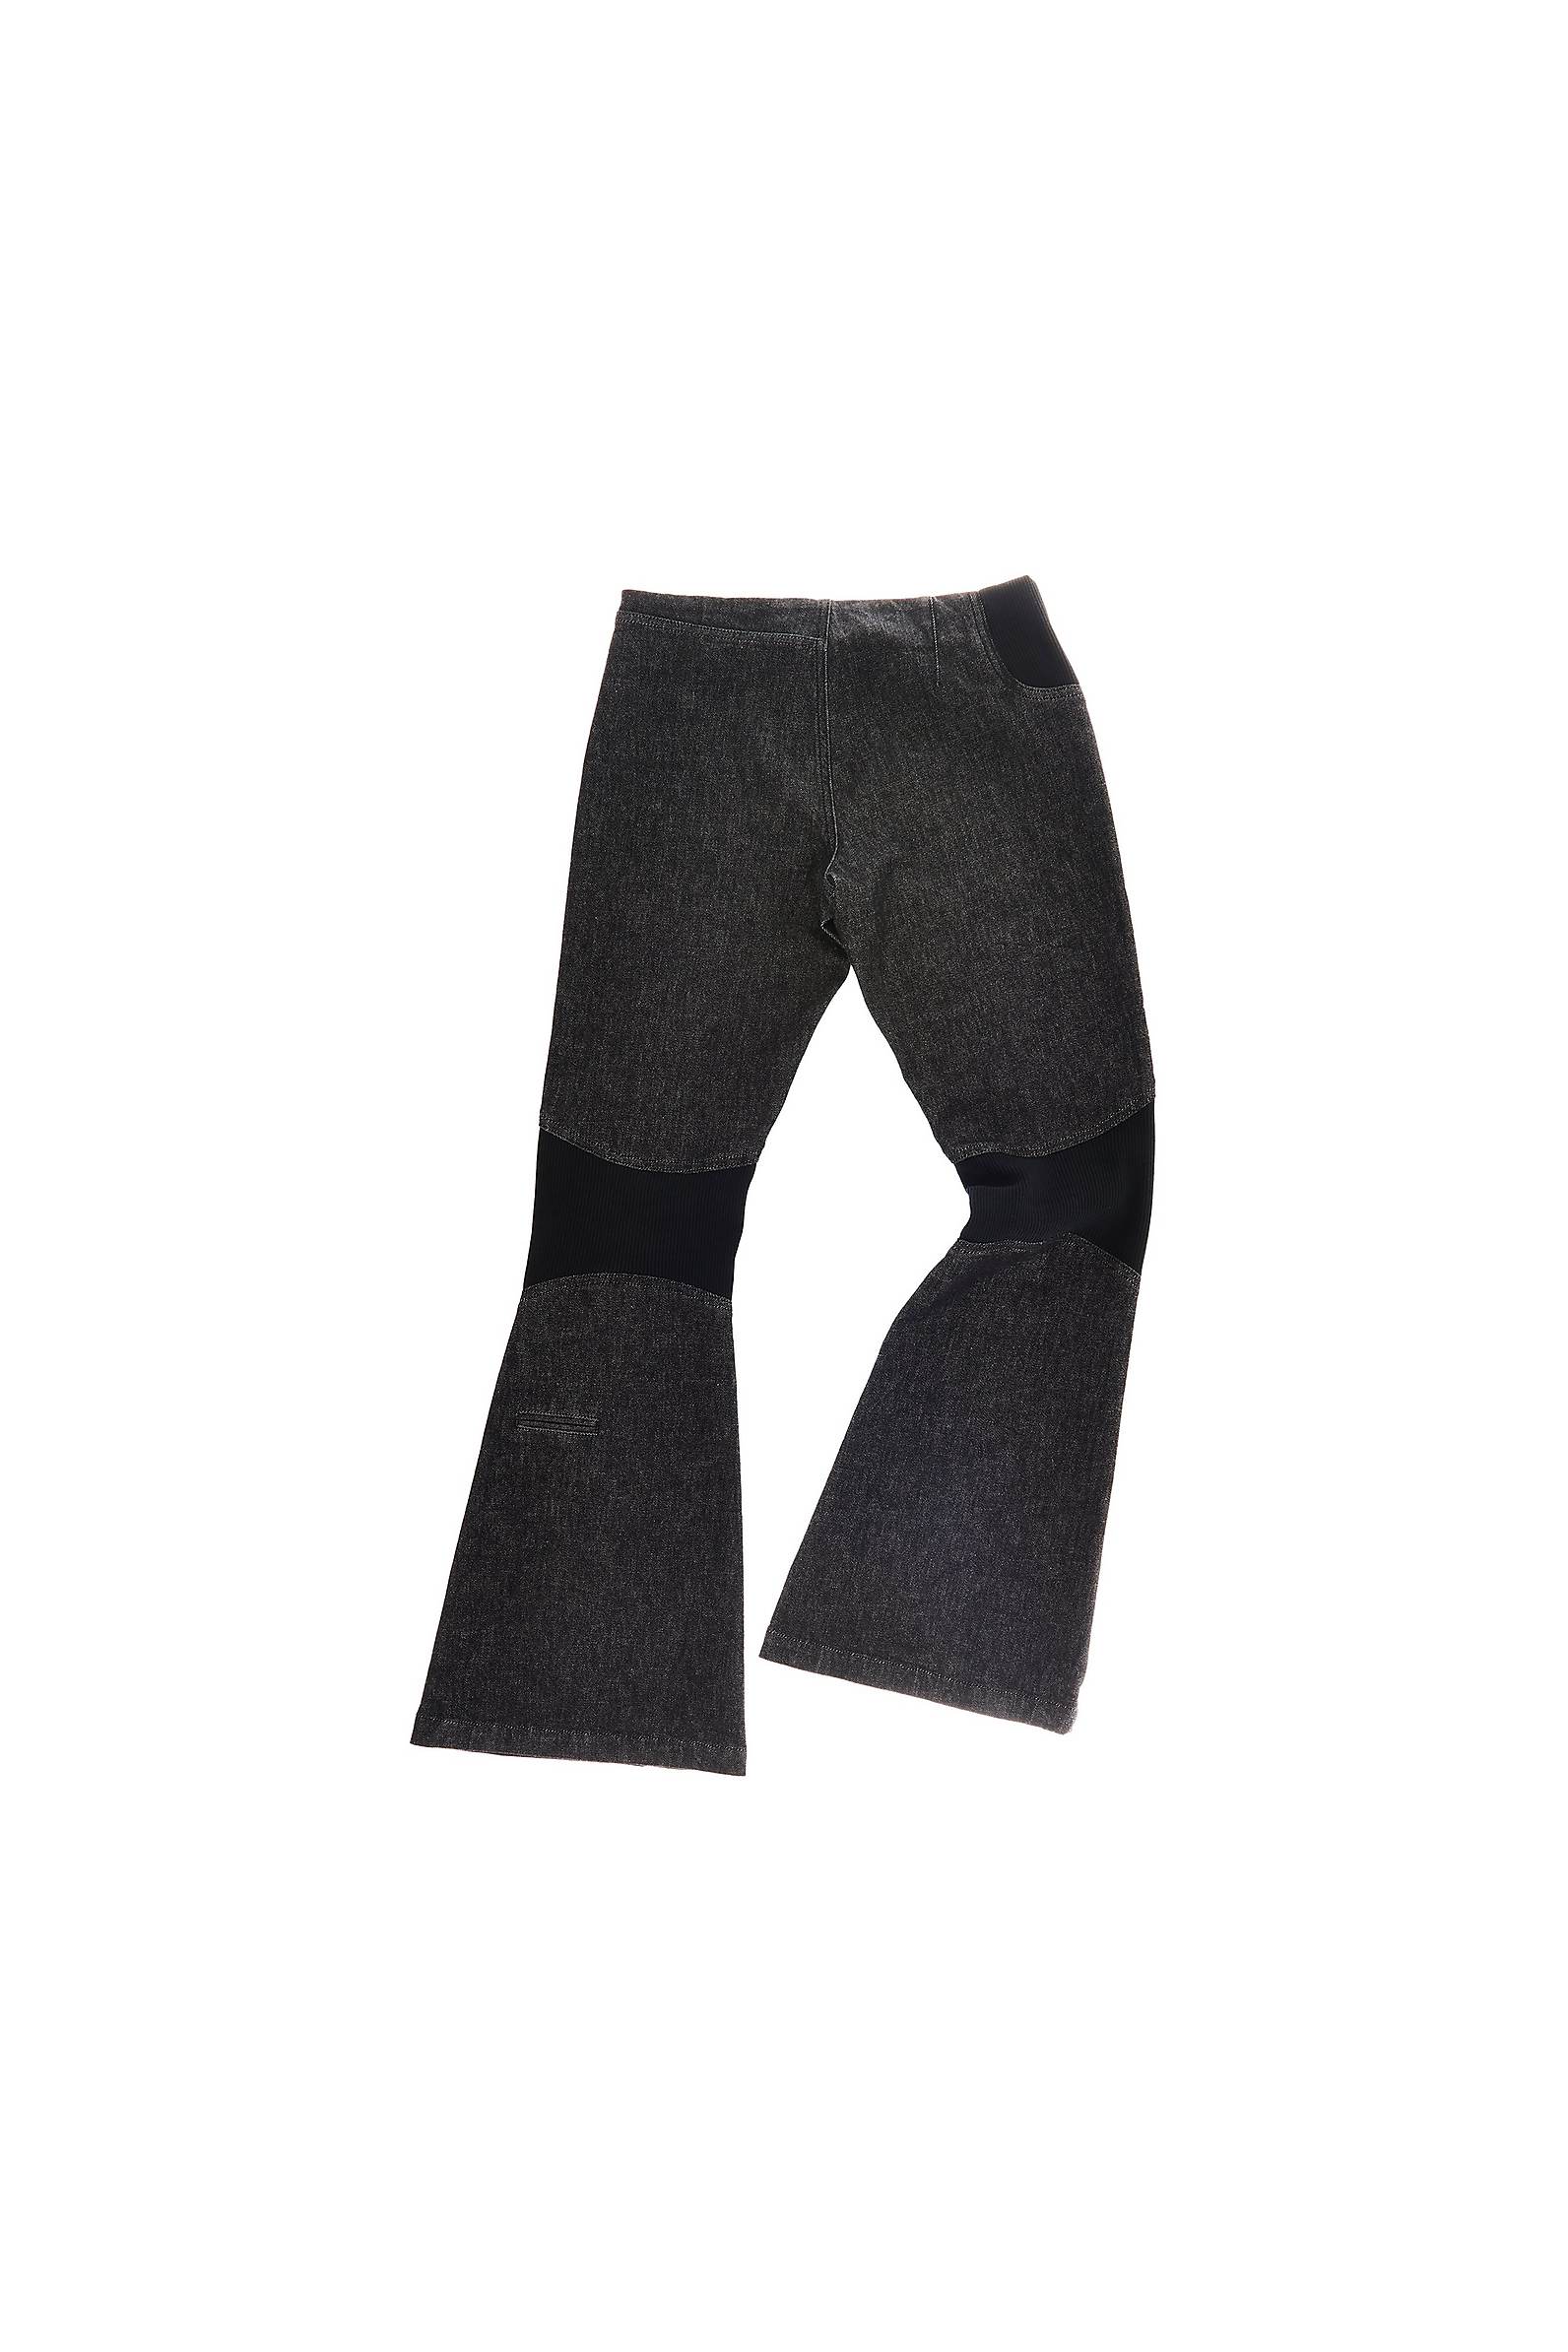 | Denim Heaven Marc Jacobs Rib And Jeans